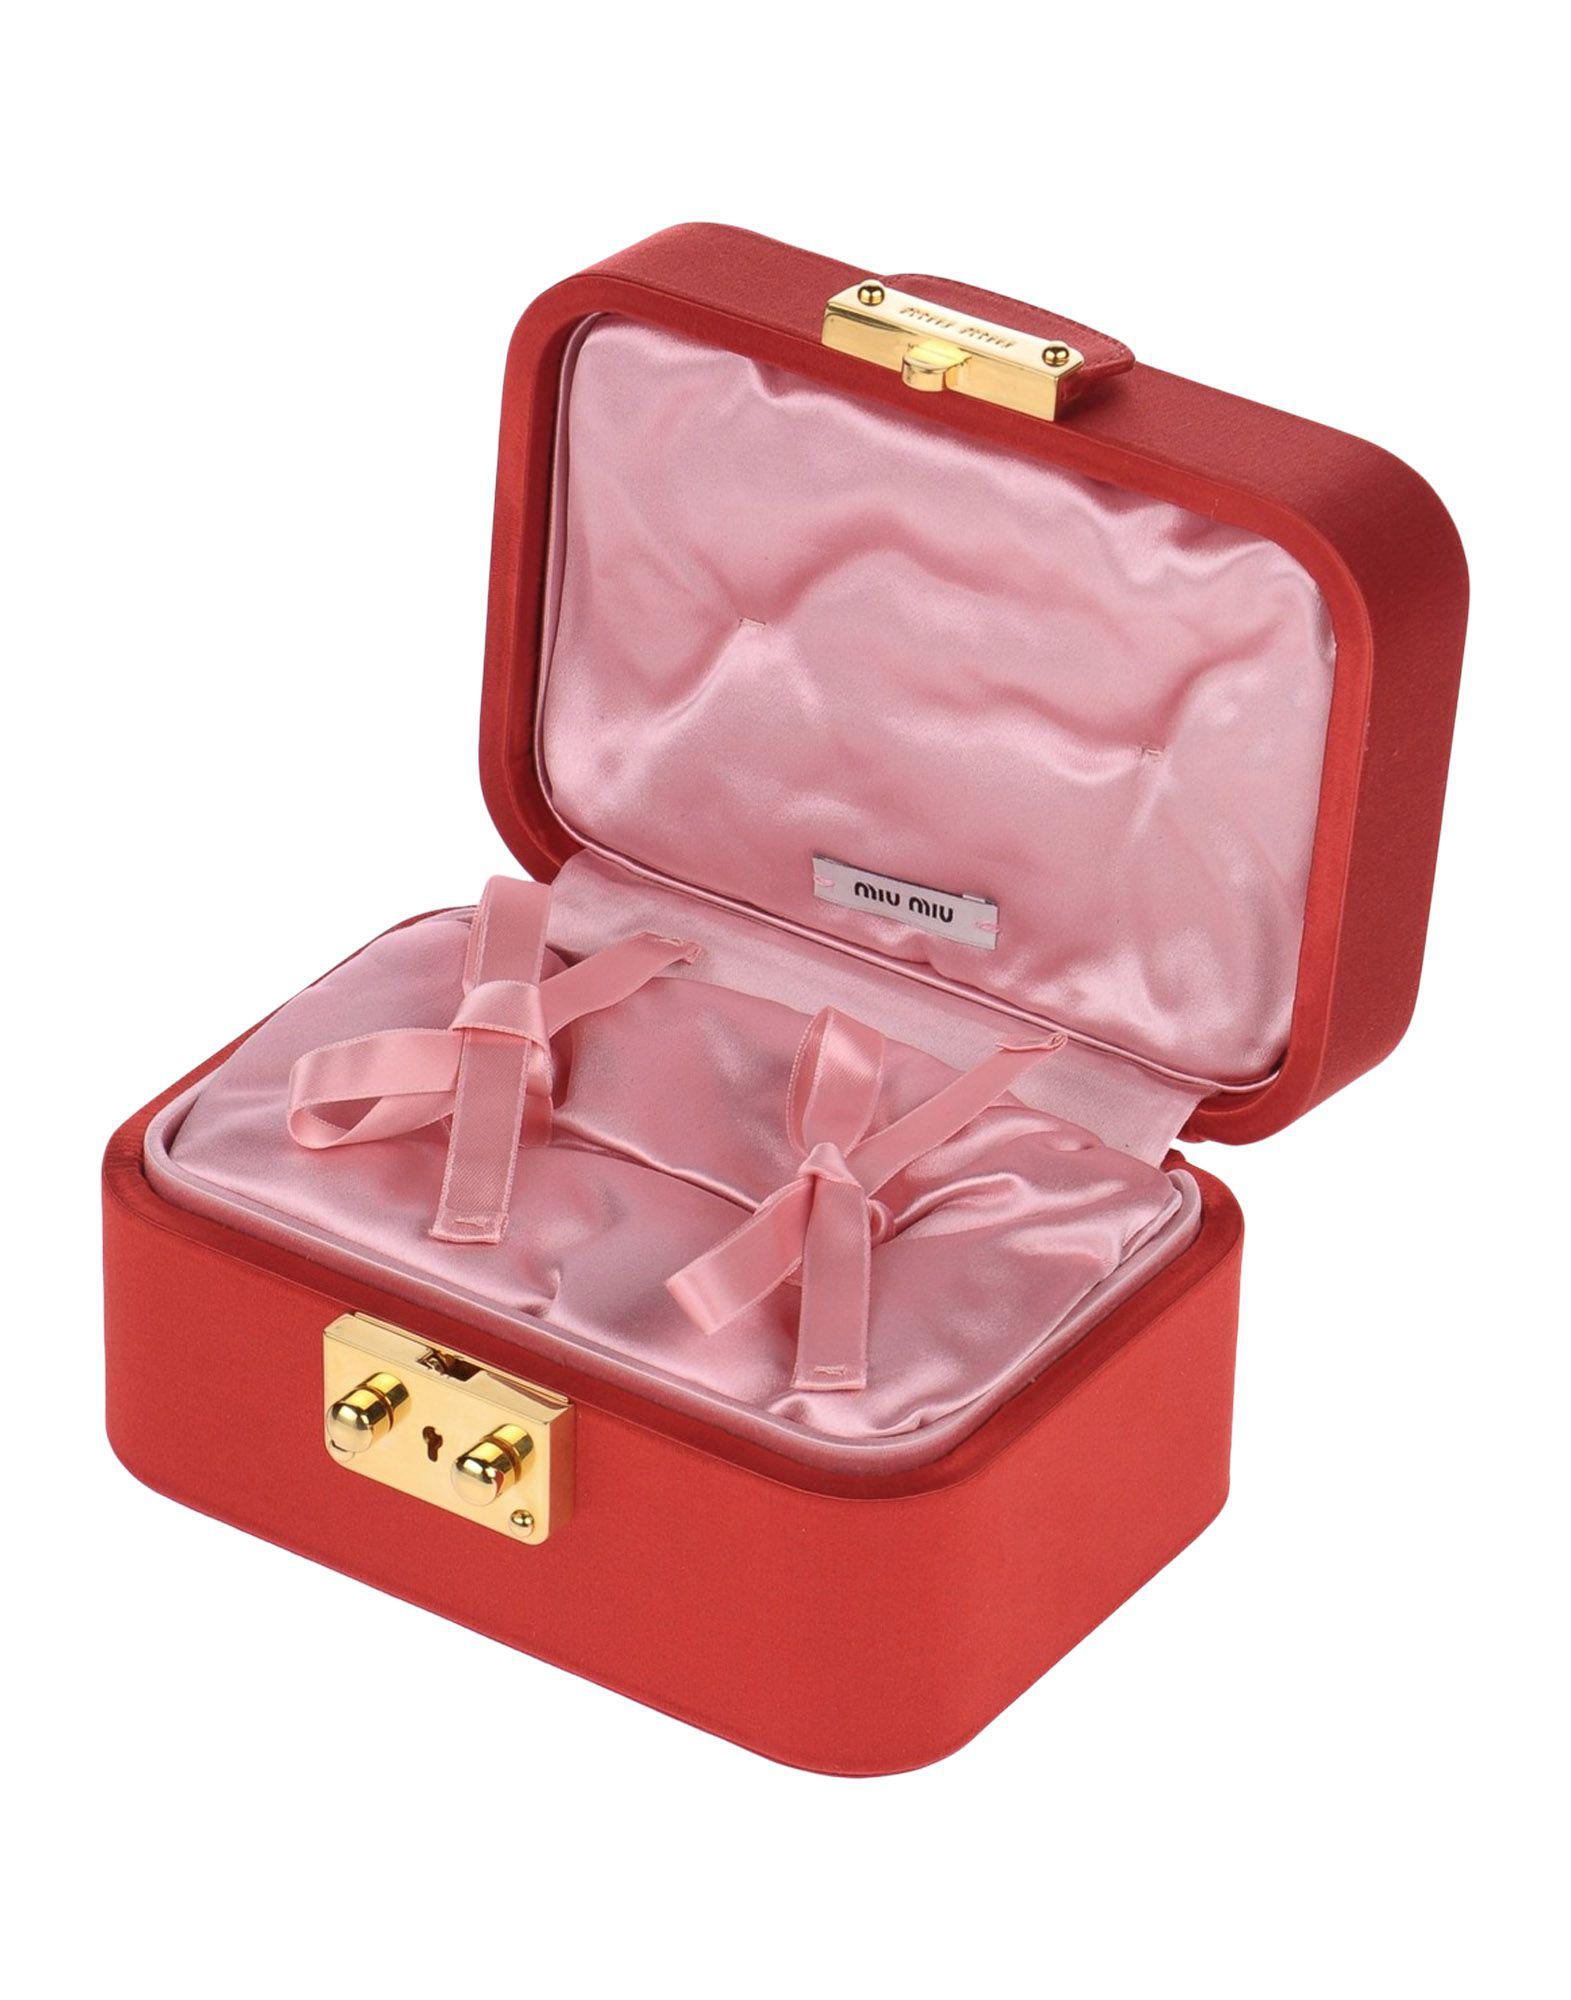 Miu Miu Satin Jewelry Box in Red - Lyst